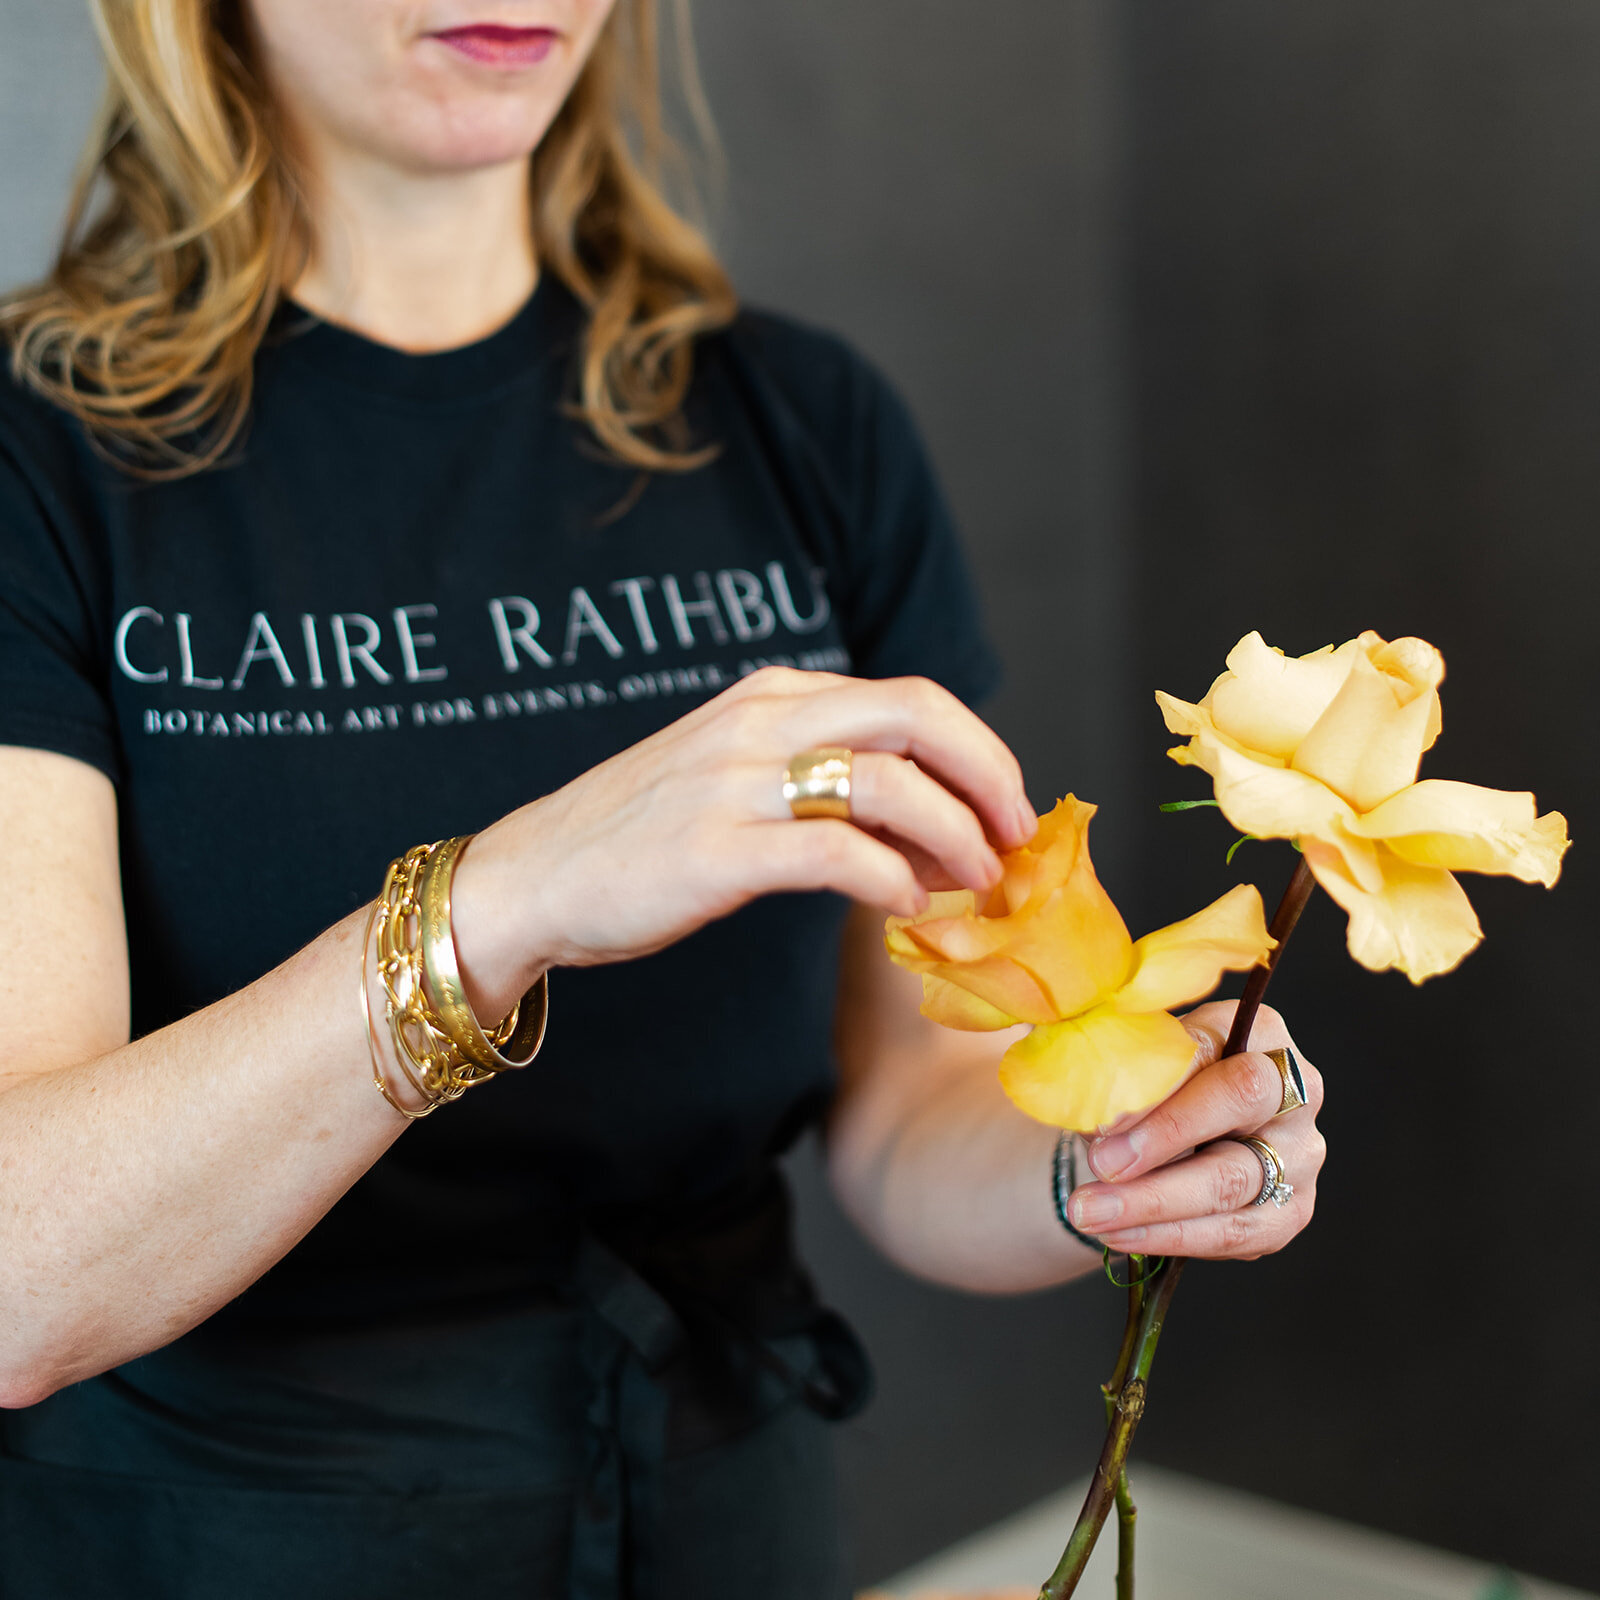 Claire Rathbun Floral creating designs